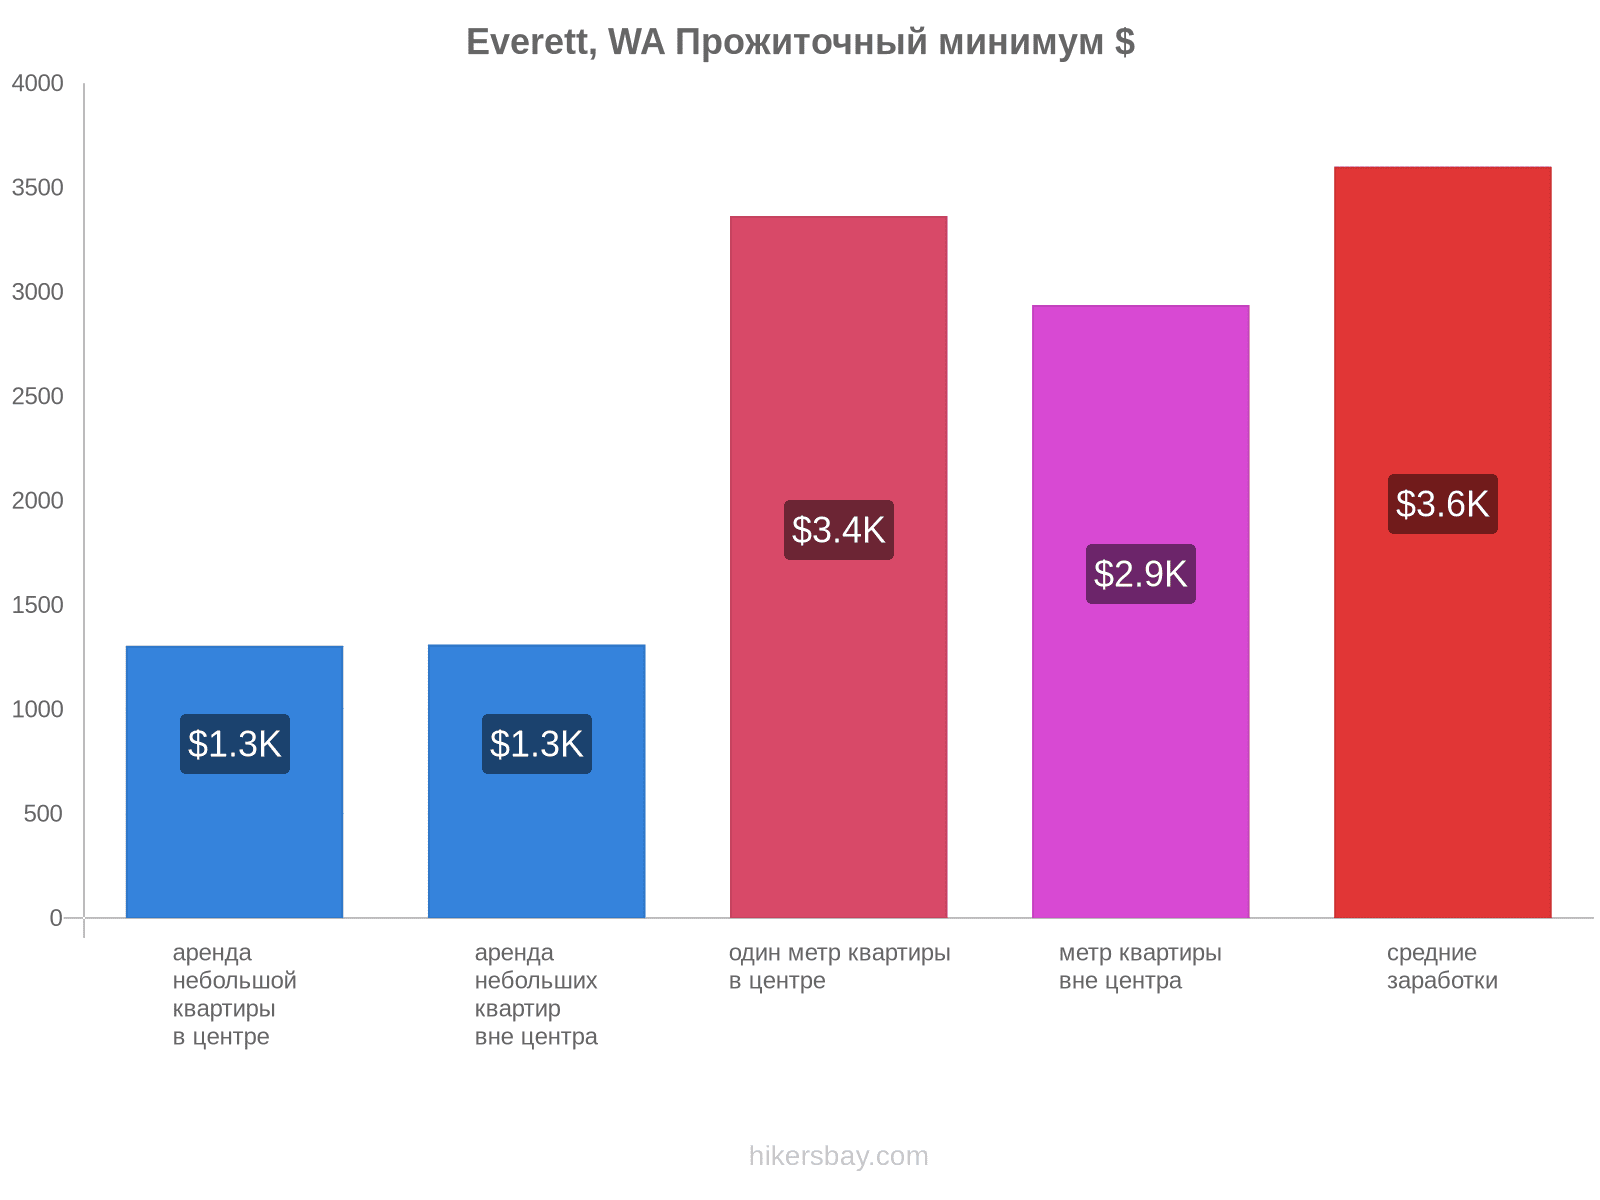 Everett, WA стоимость жизни hikersbay.com